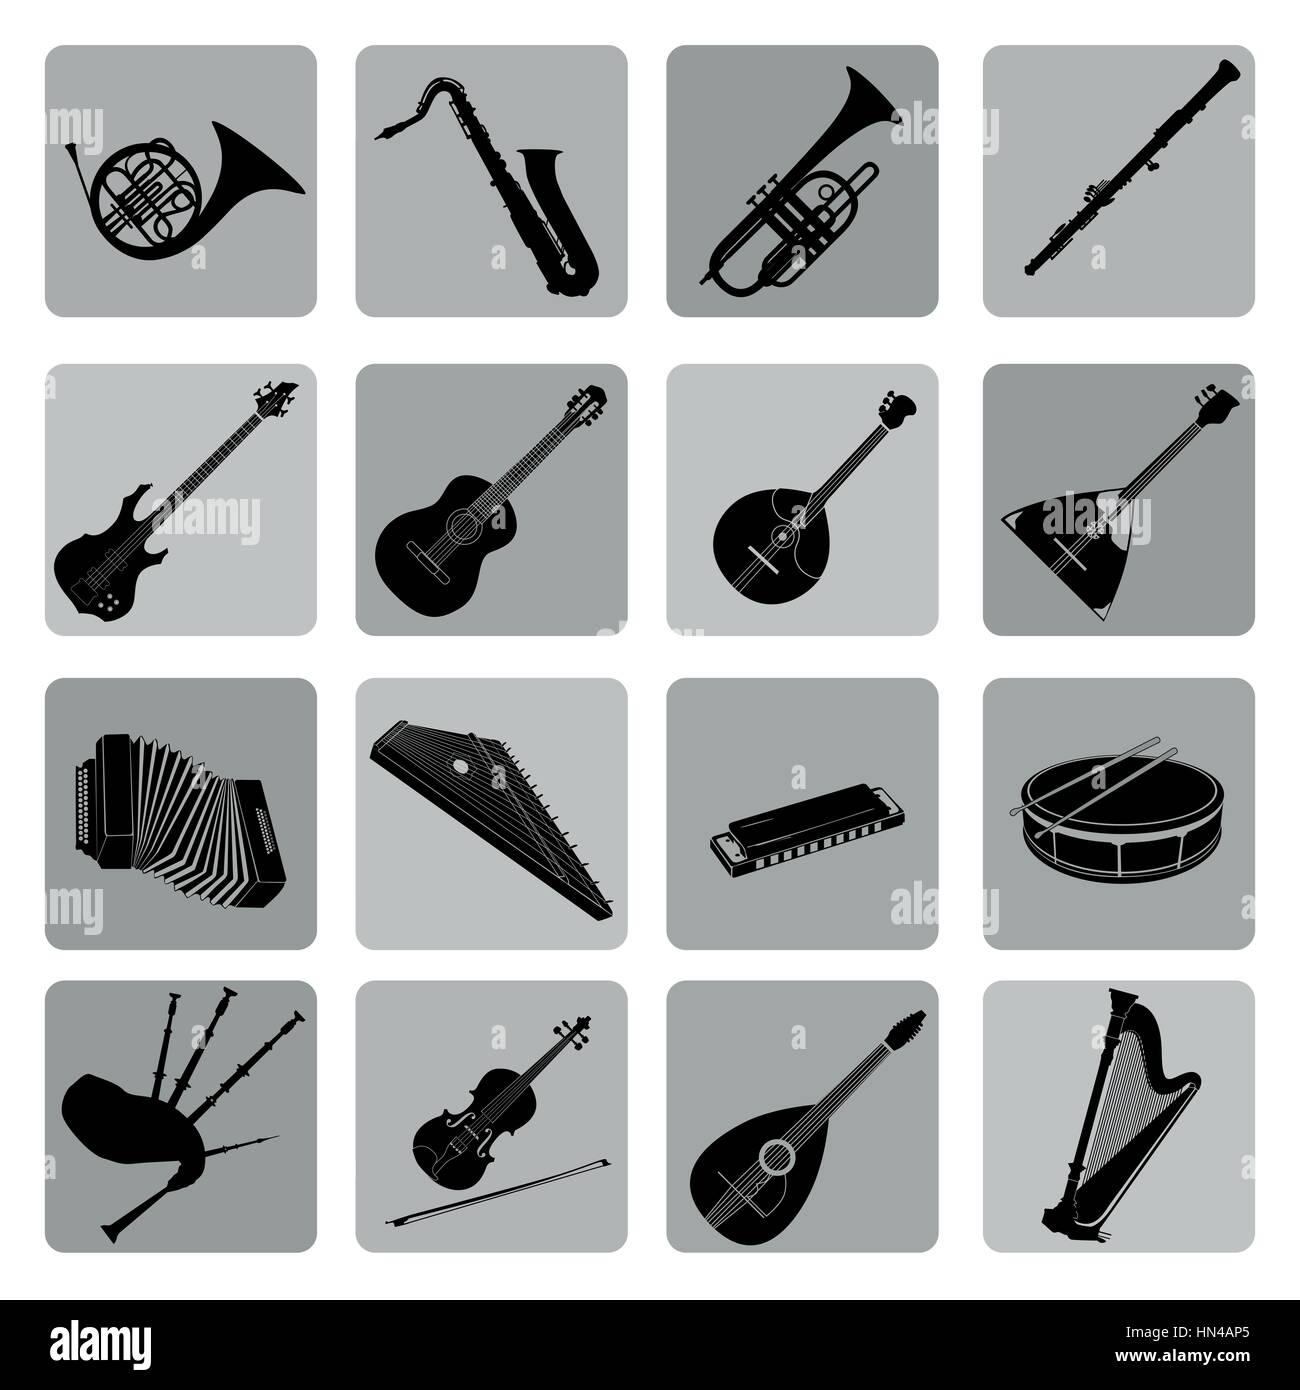 Musikinstrumente Icon Set. Folk, Klassik, Jazz, Ethno, Rock Musik Symbole Stock Vektor